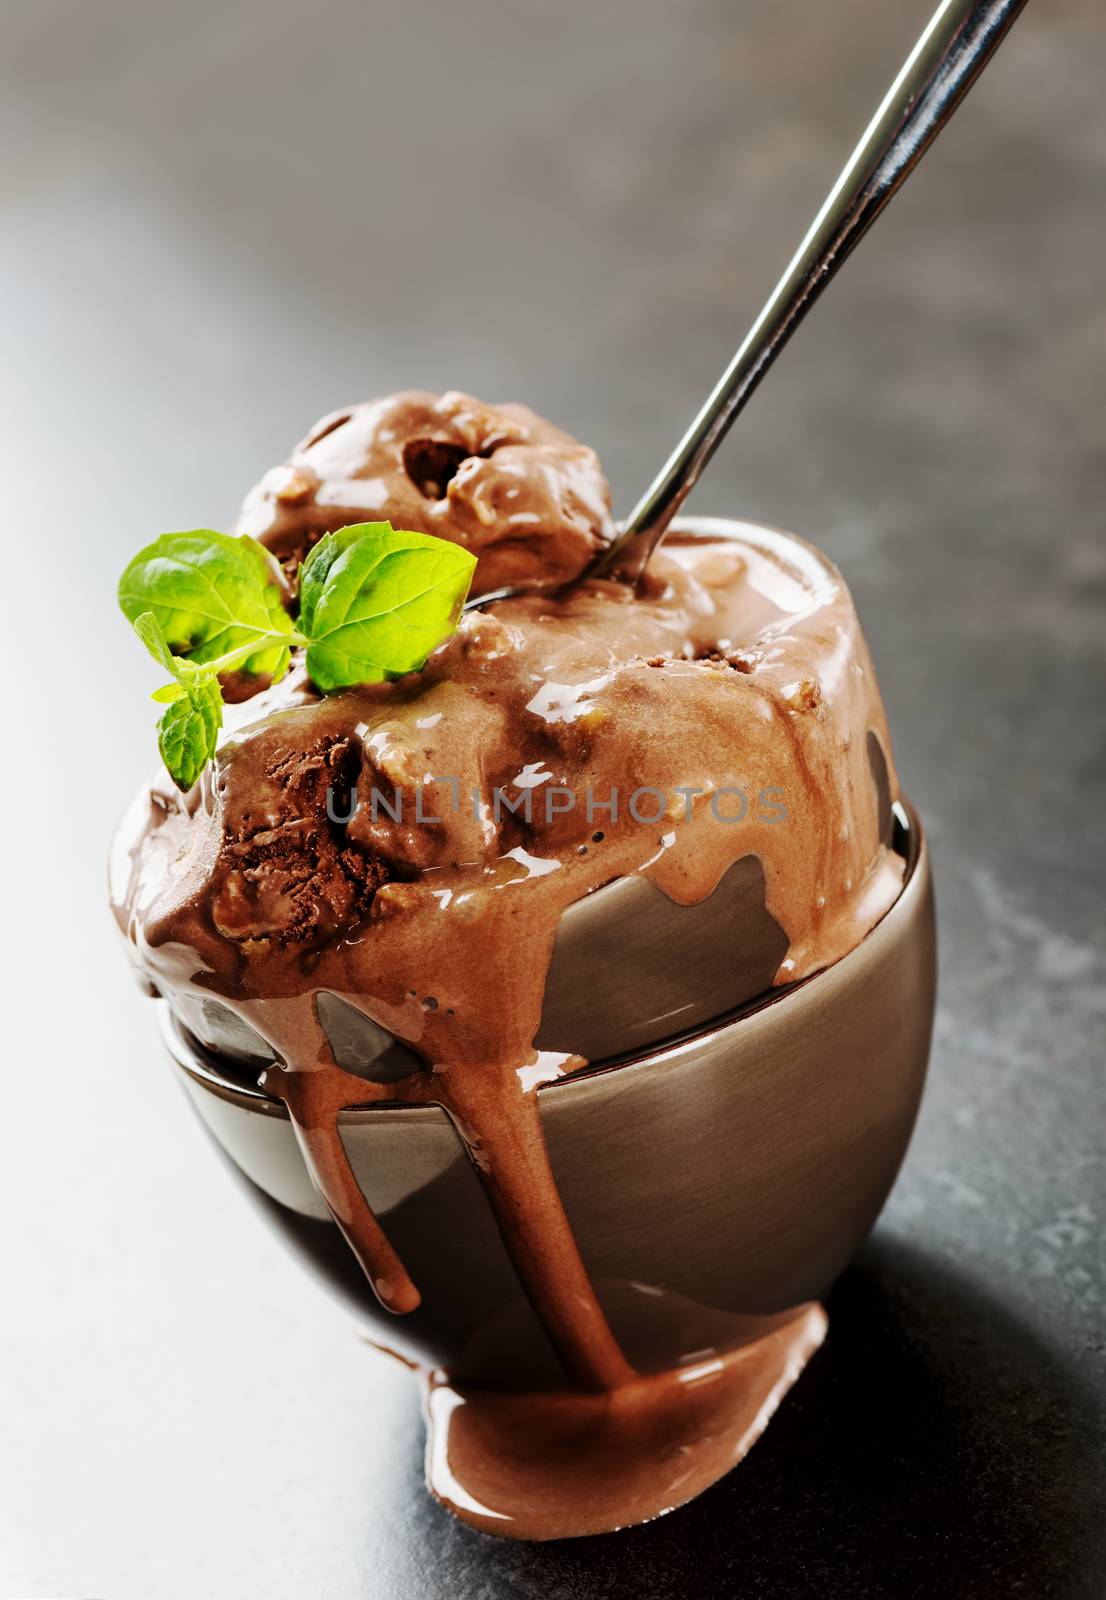 Chocolate ice cream with mint by Nanisimova